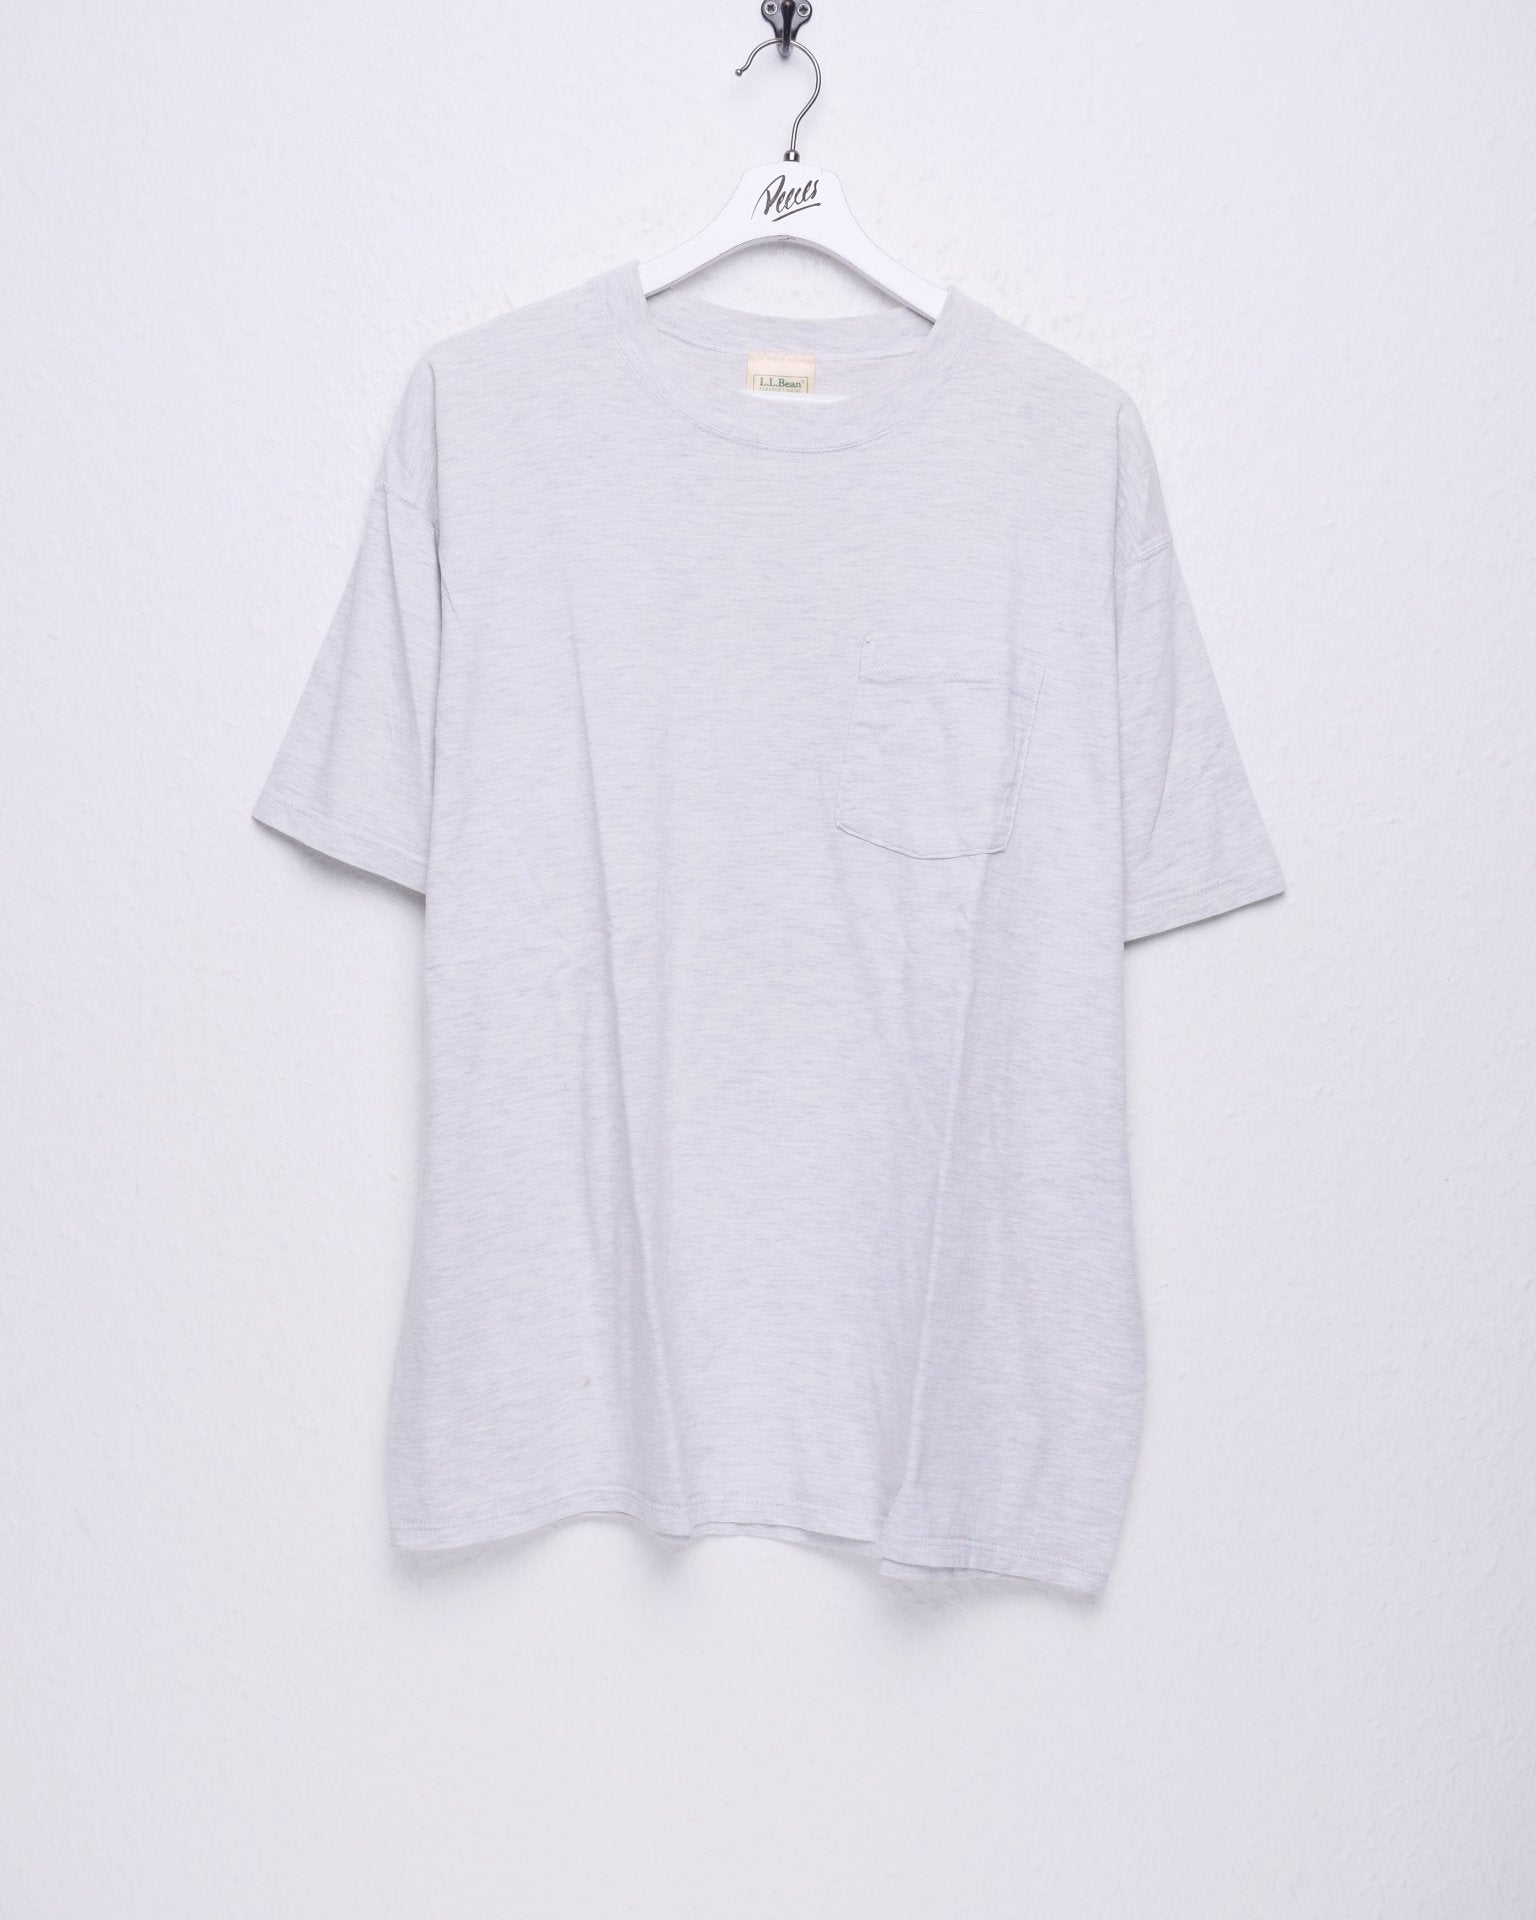 LL Bean blank oversized grey Shirt - Peeces